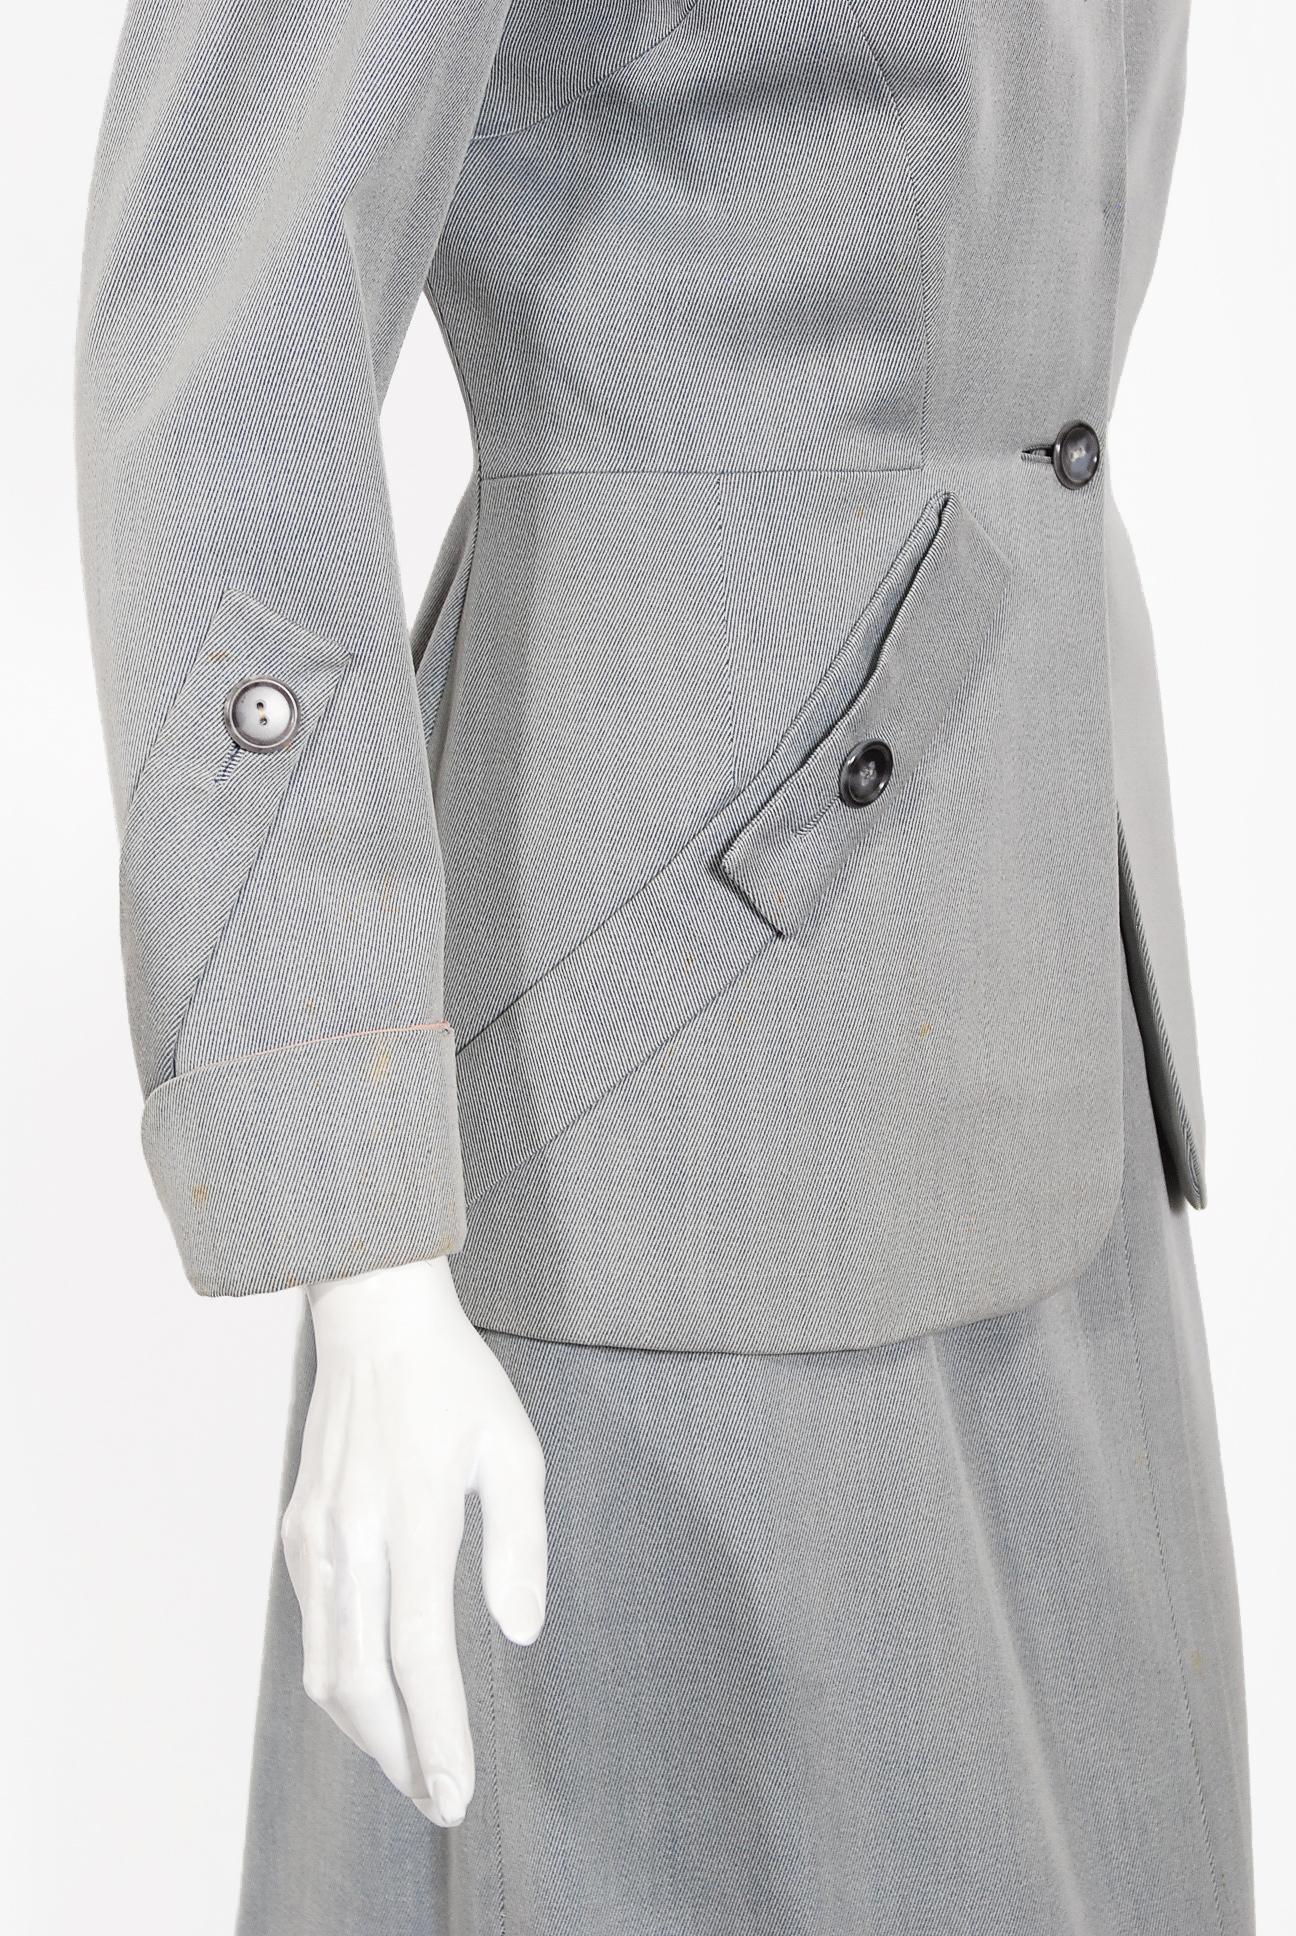 1940 women's clothing